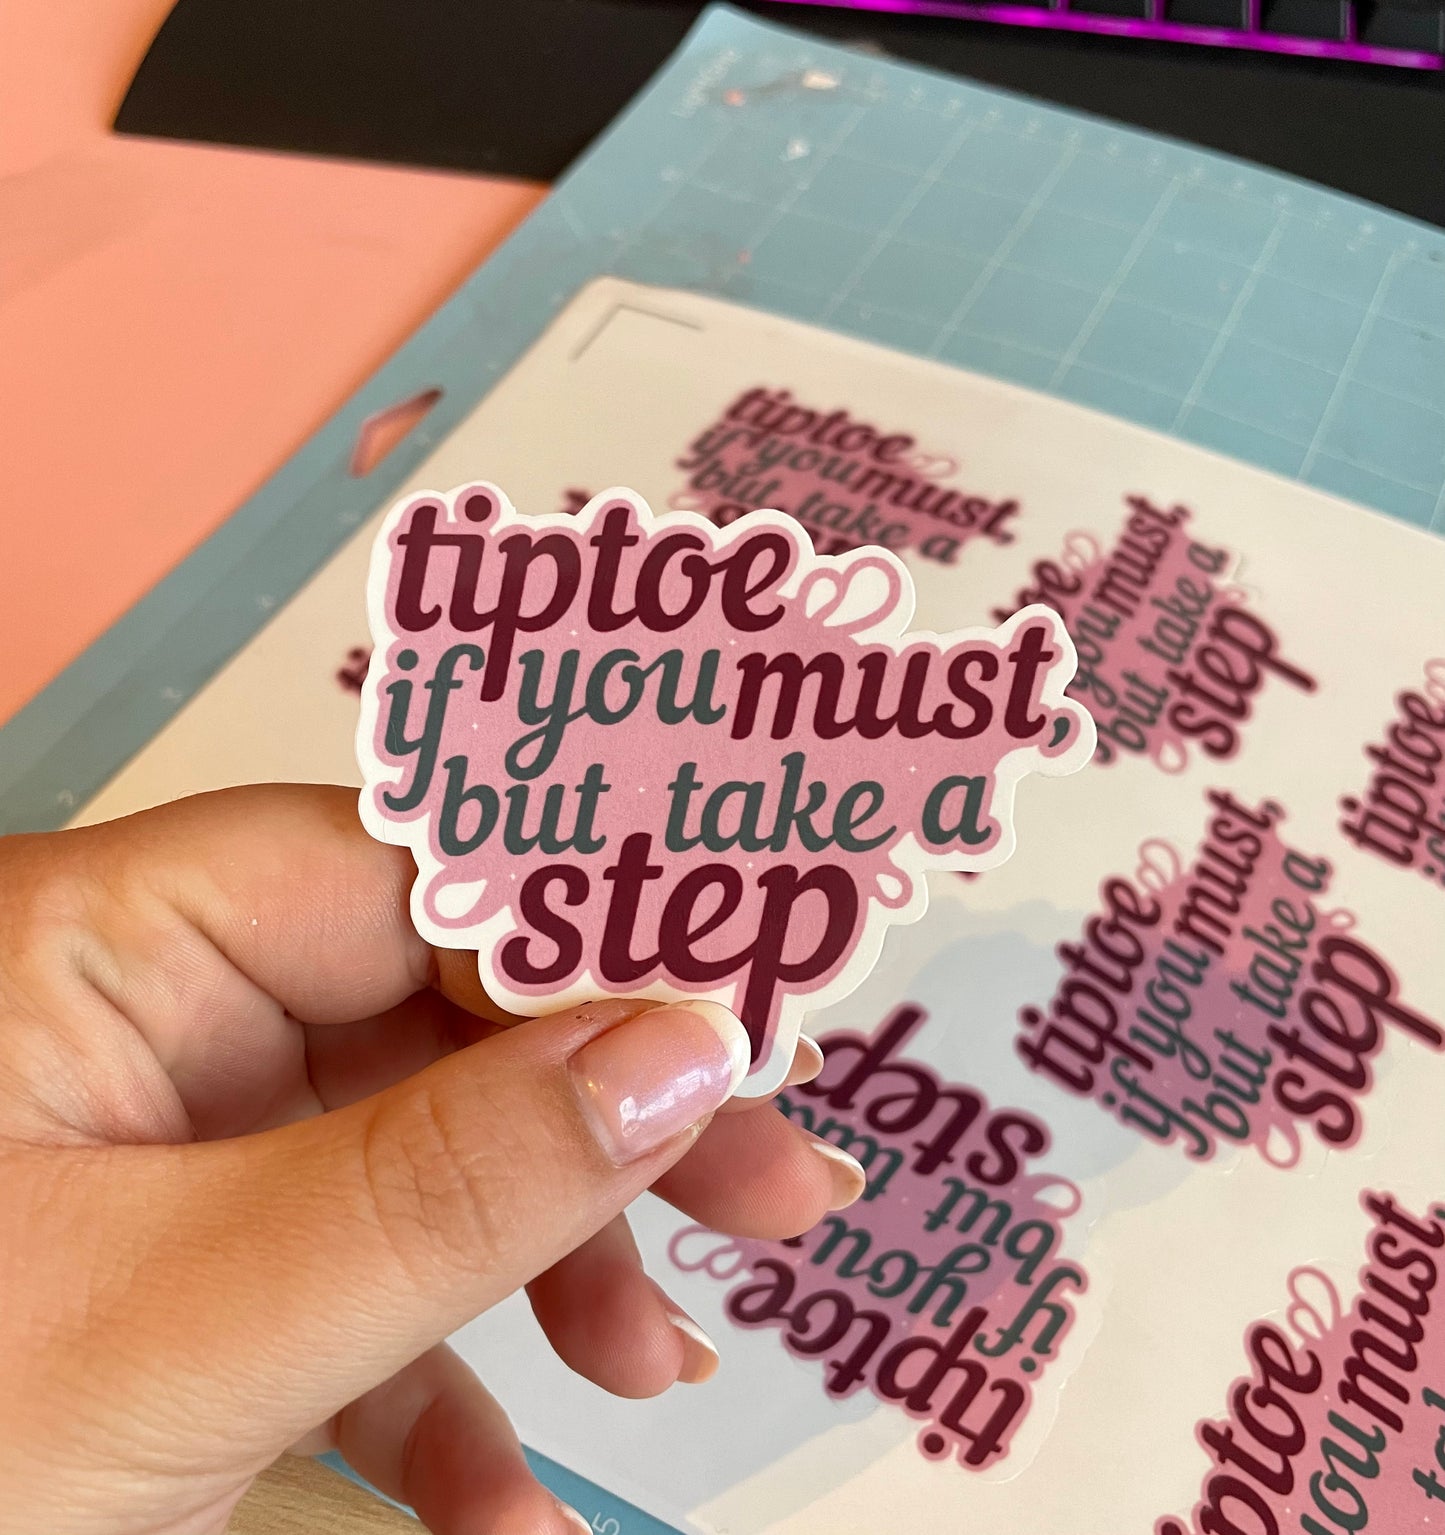 Tip Toe if You Must Die Cut Sticker